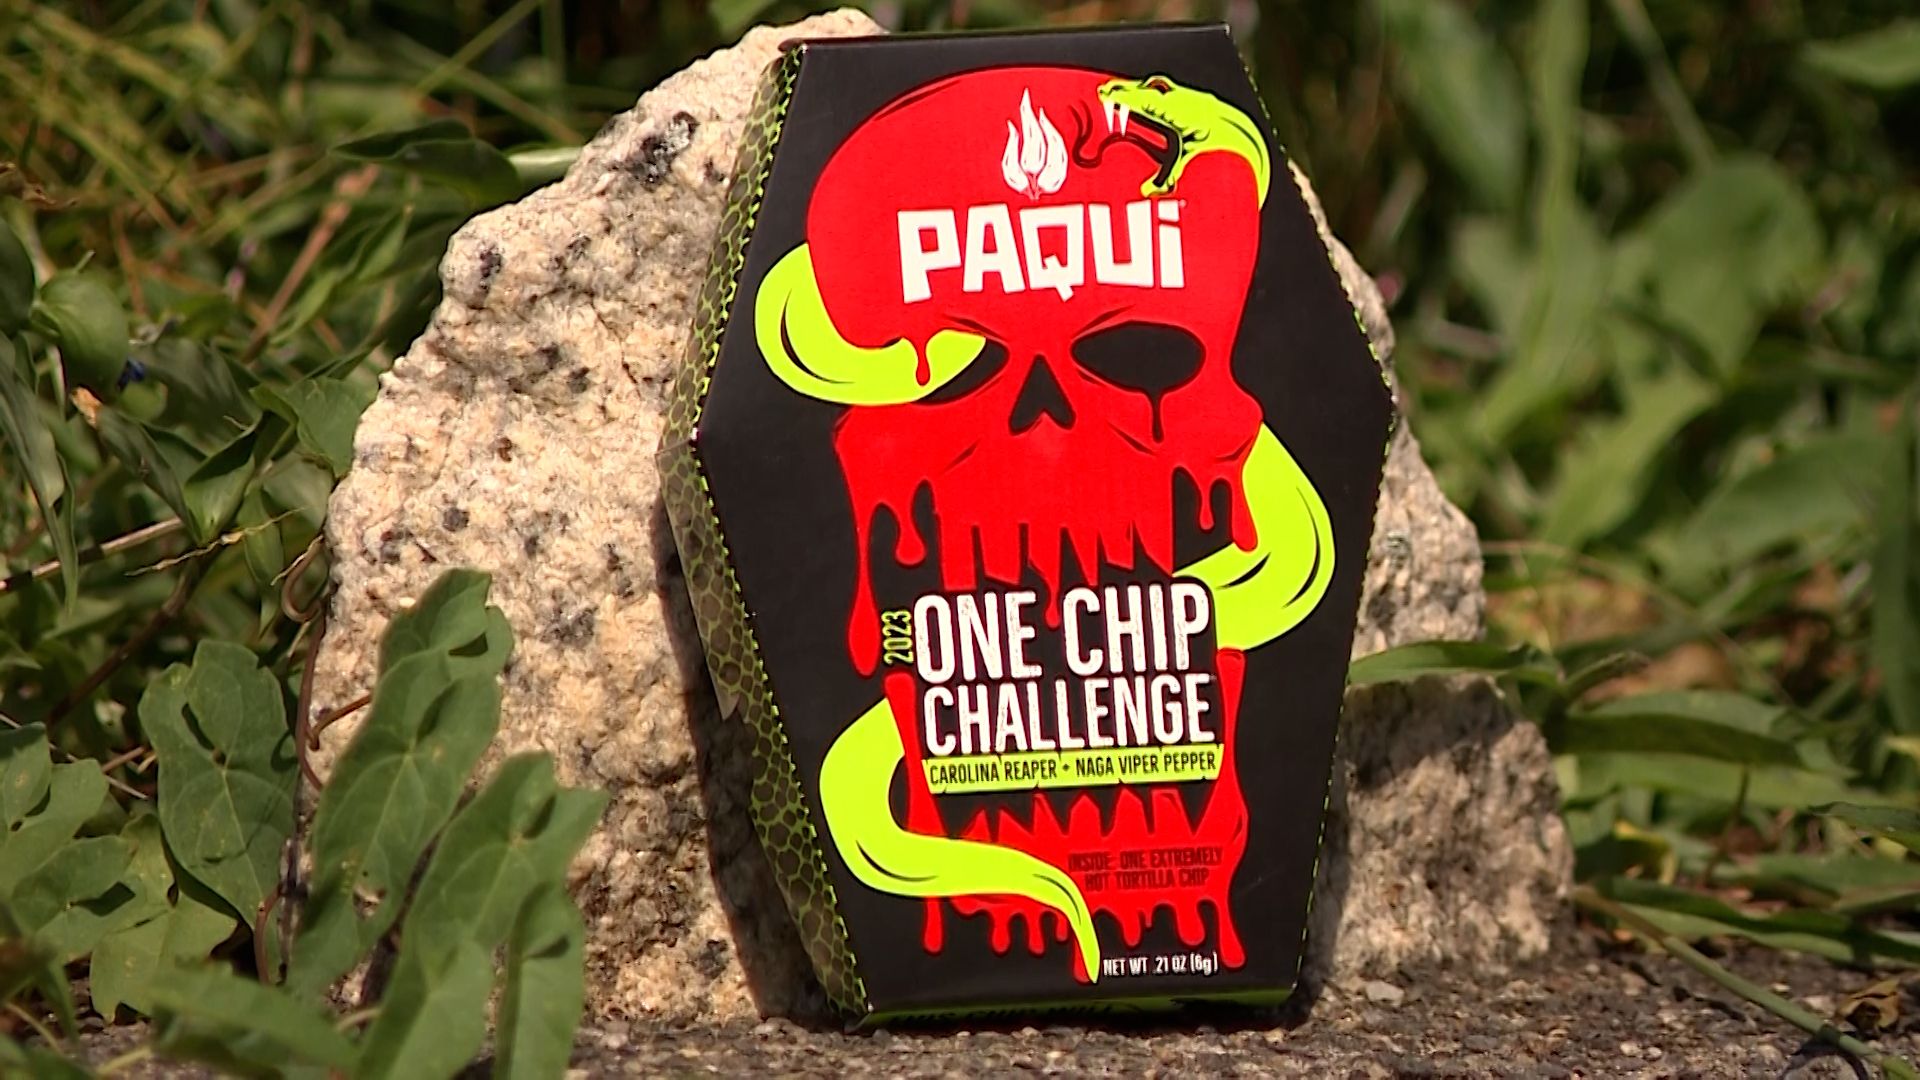 Mass. teen dies after taking part in super spicy One Chip Challenge